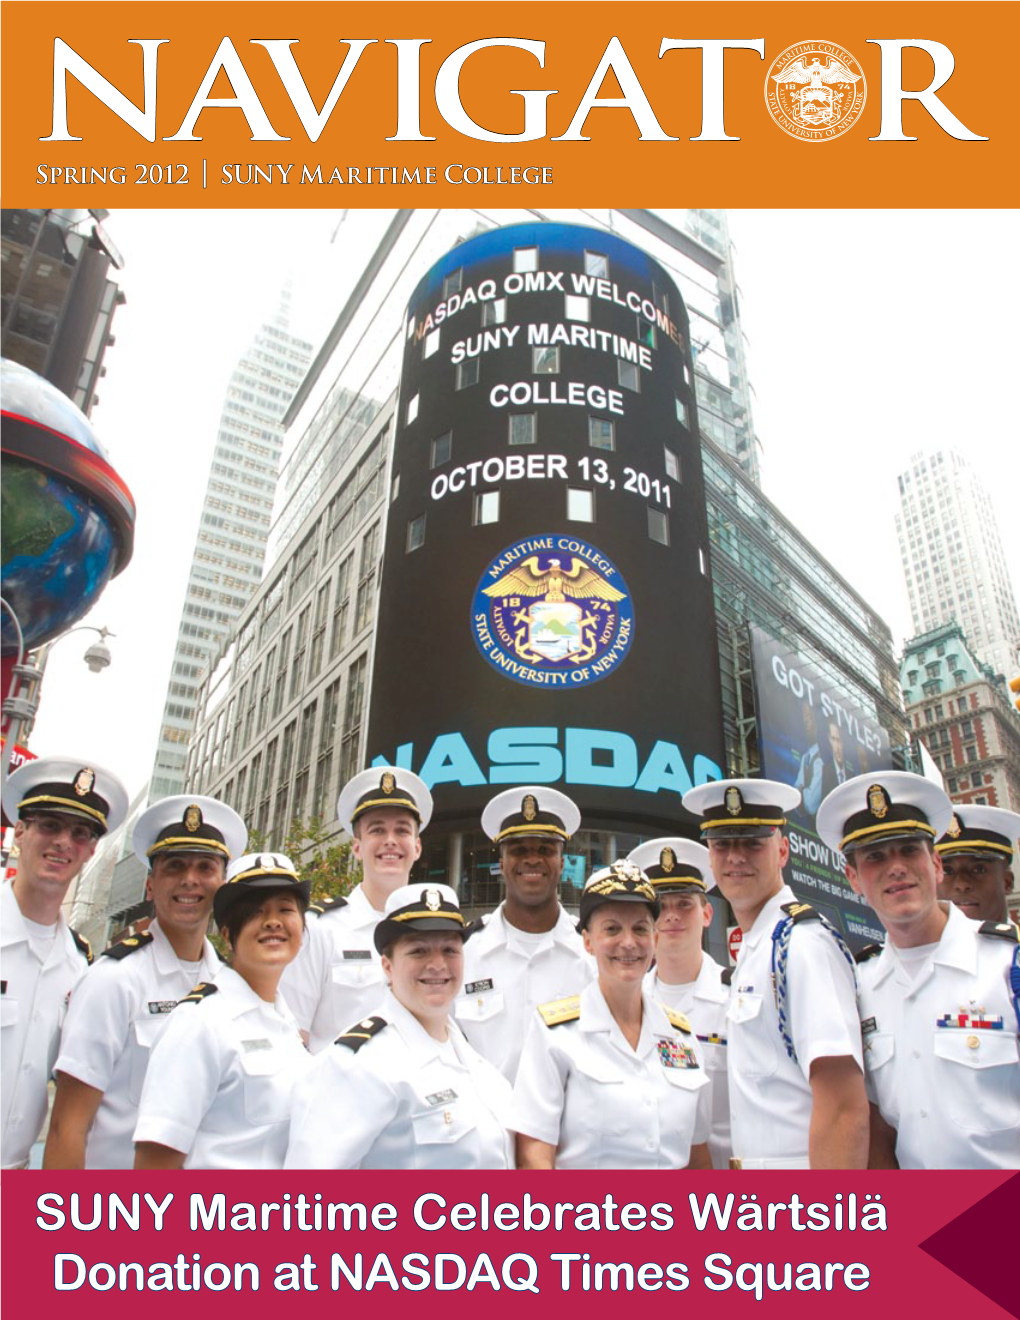 SUNY Maritime Celebrates Wärtsilä Donation at NASDAQ Times Square